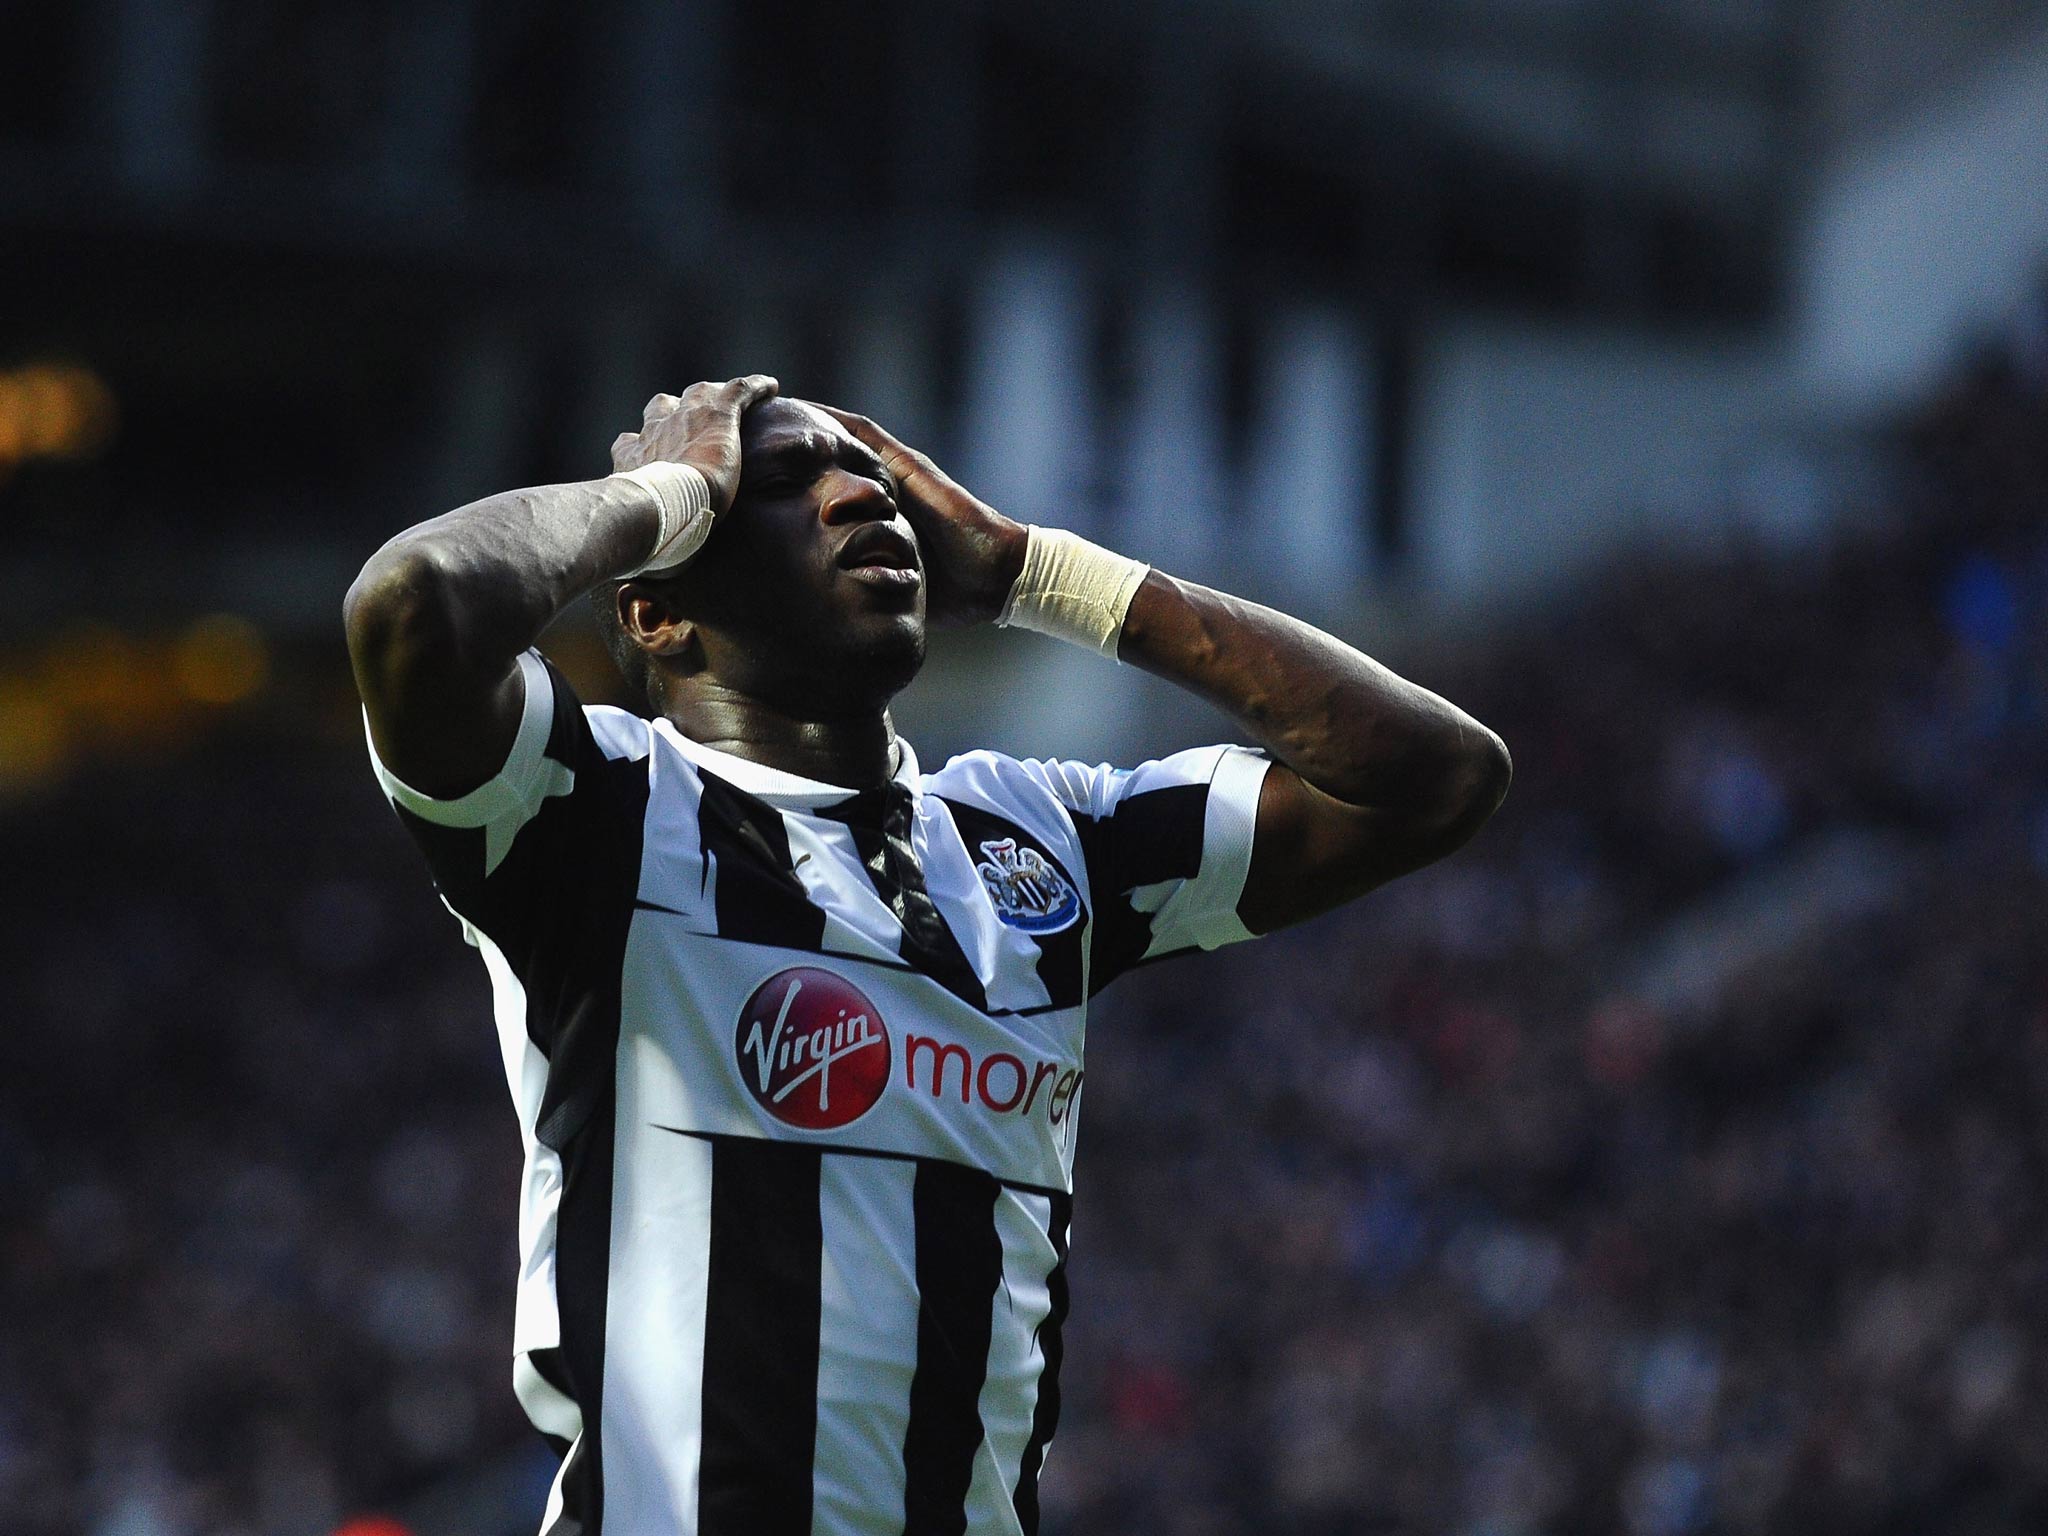 Newcastle midfielder Moussa Sissoko